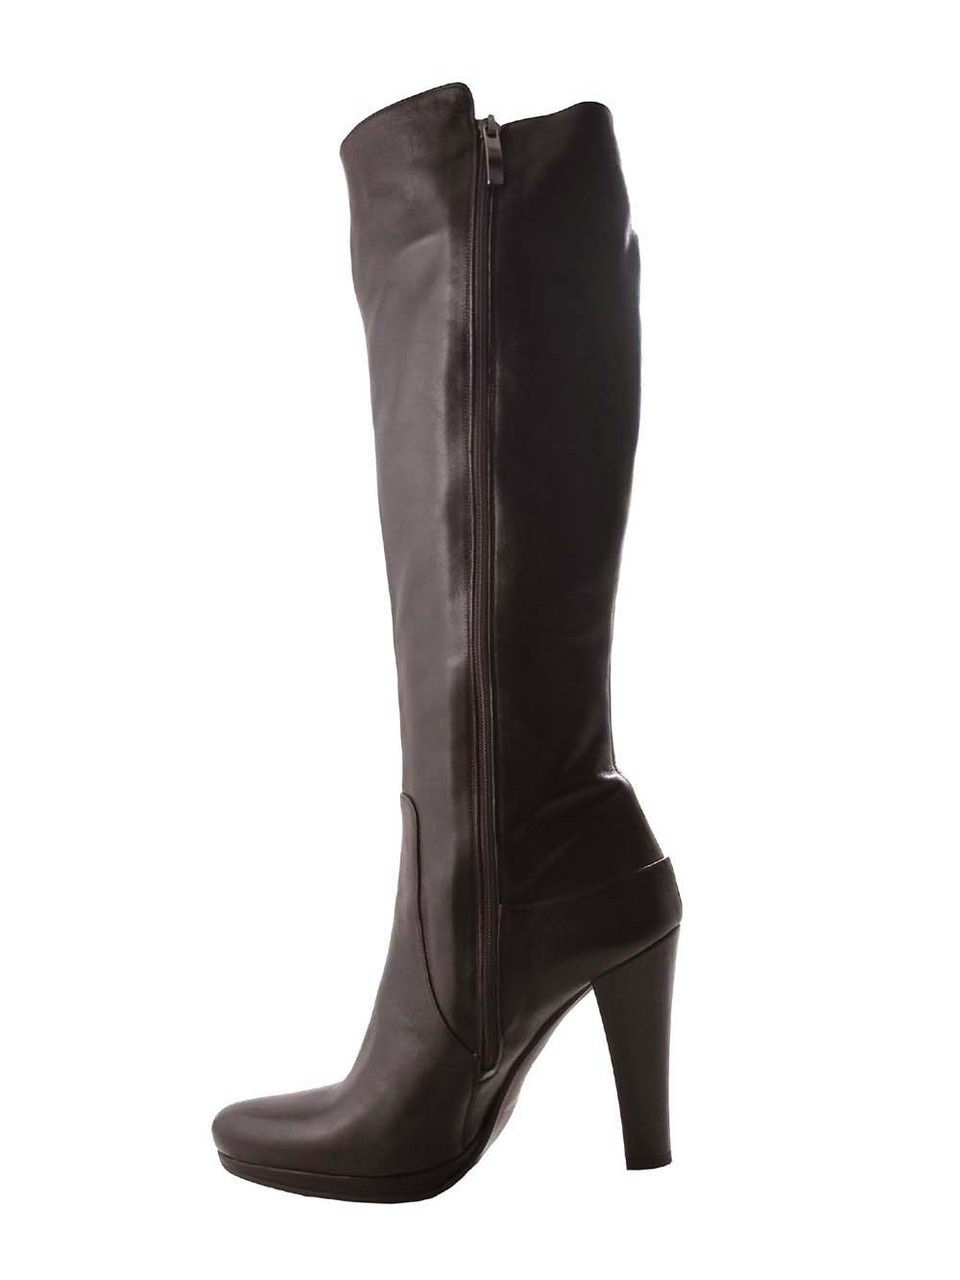 Albano Women's Italian Knee High Boots 818 Italian, Dark Brown